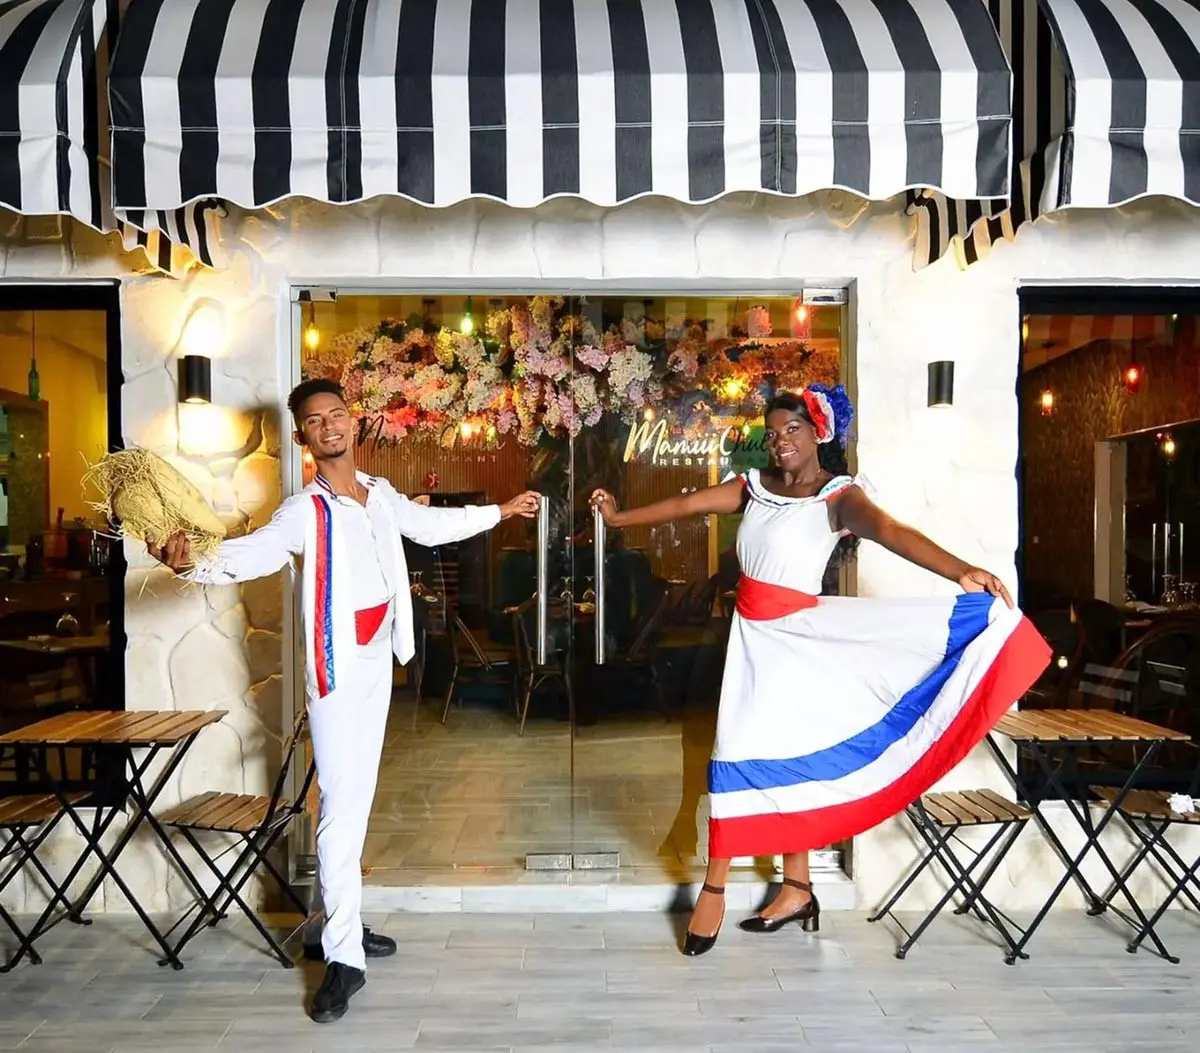 People in local dress inviting visitors to Mamiii Chula Restaurant at Playa Palmera Beach Resort